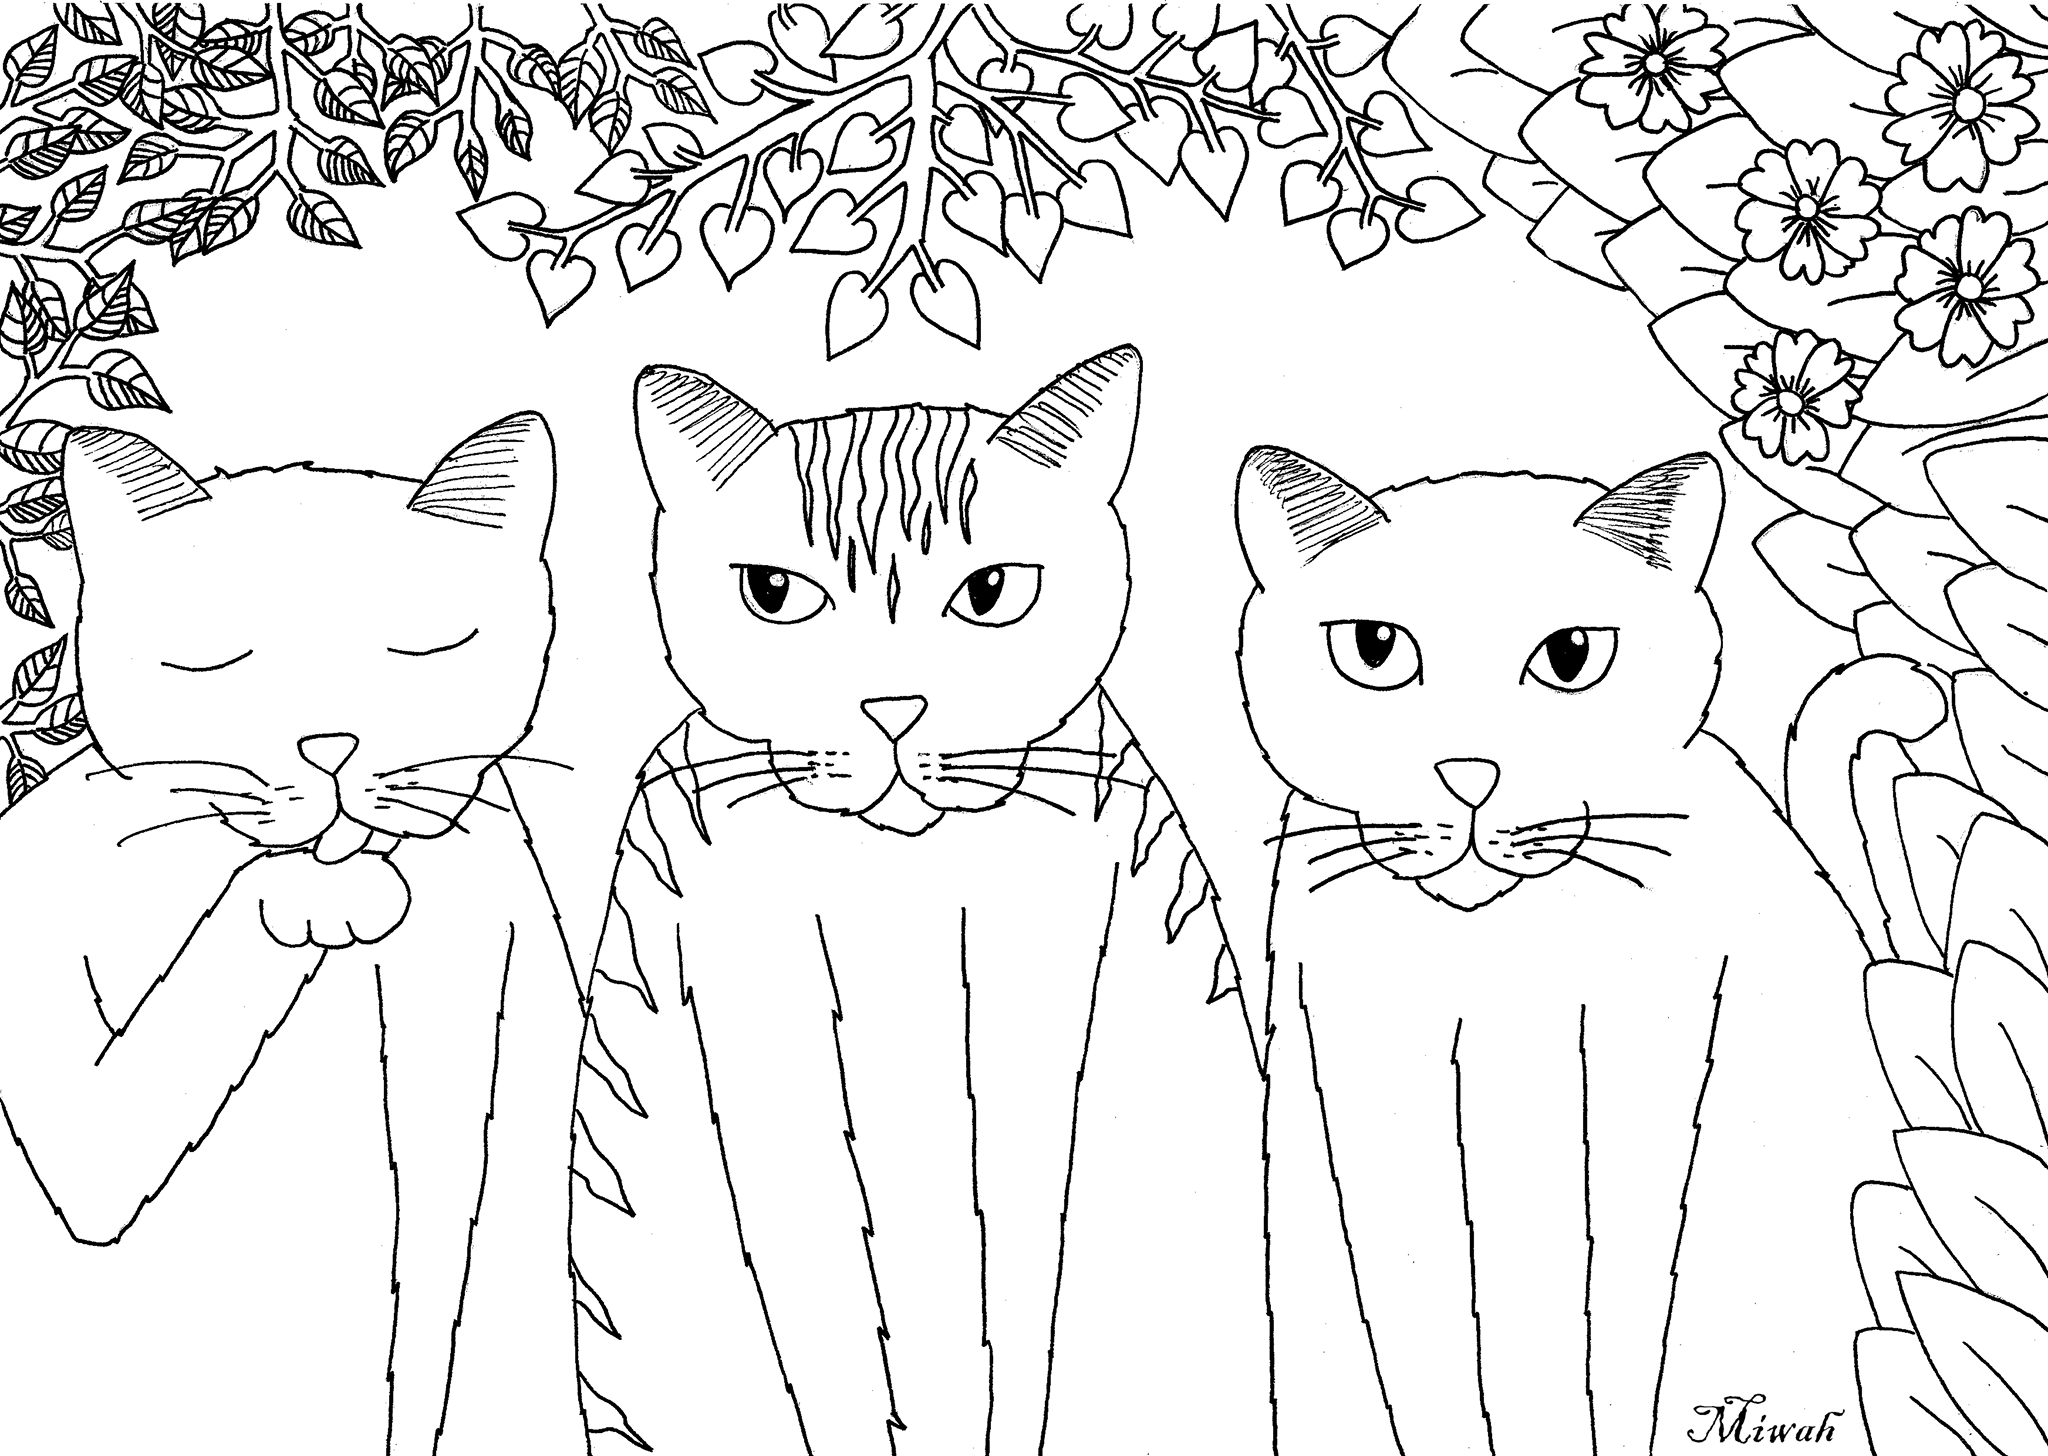 Dois pequenos gatos no jardim - Gatos - Coloring Pages for Adults